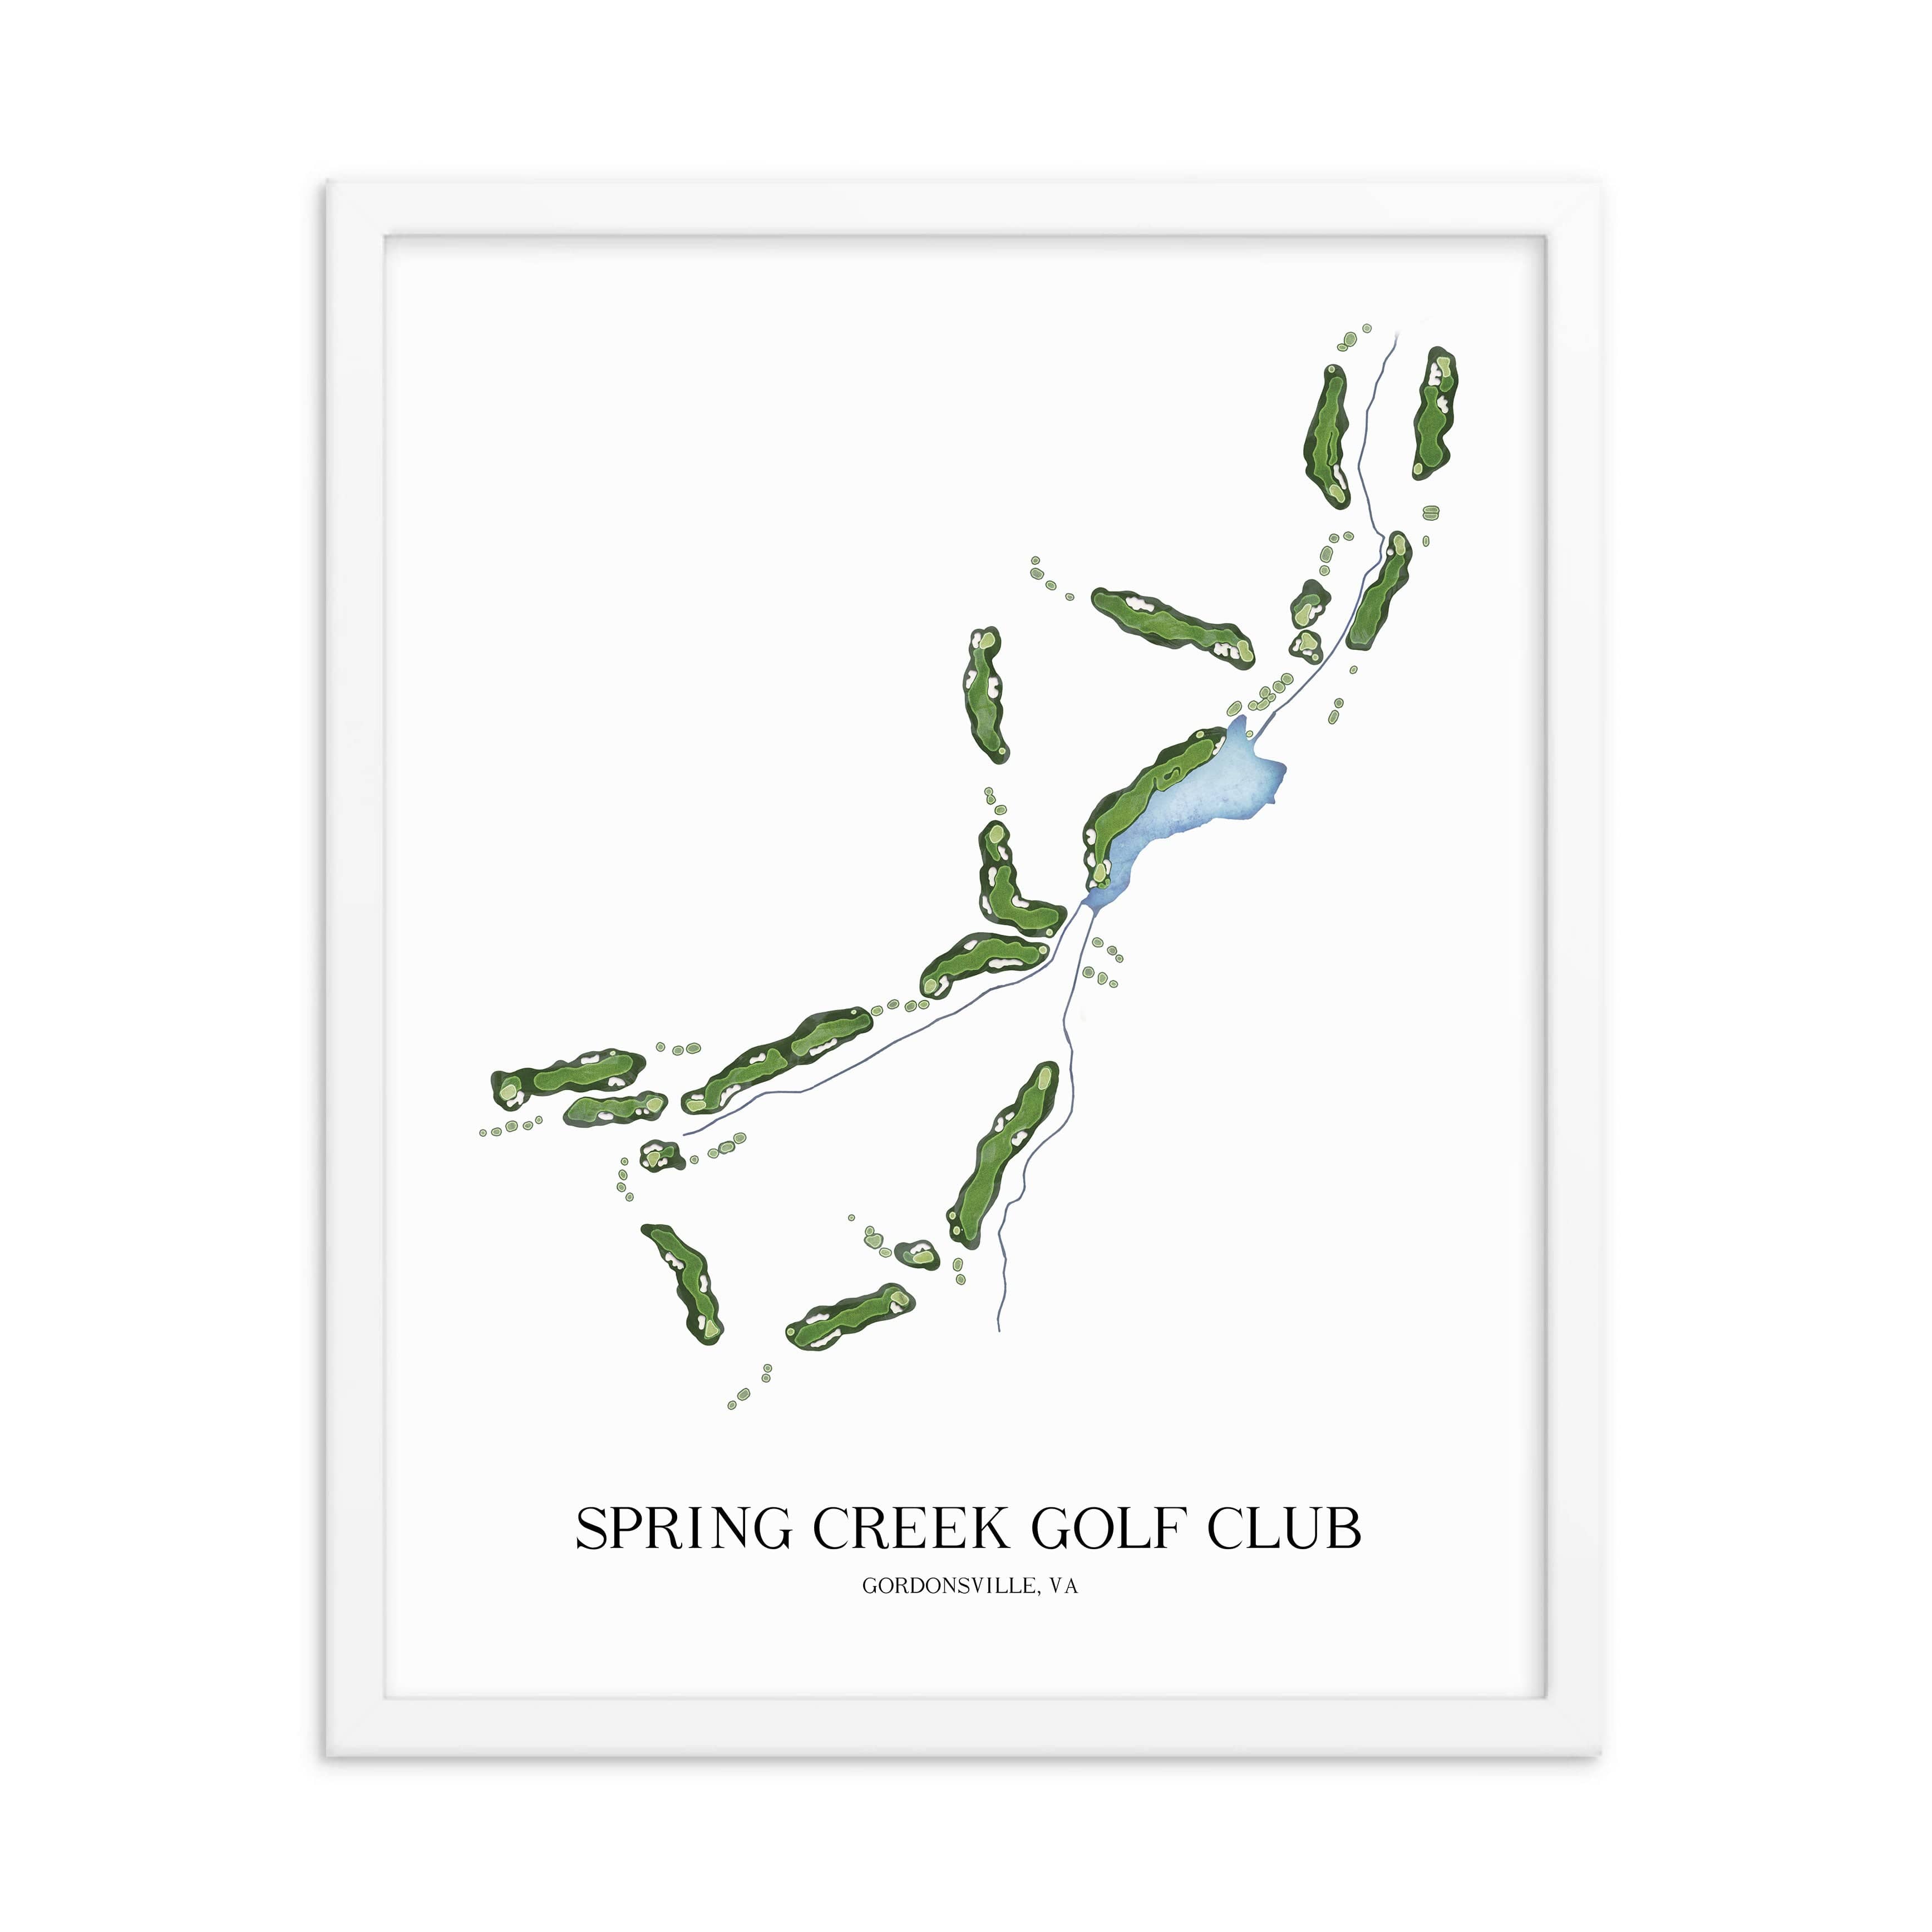 The 19th Hole Golf Shop - Golf Course Prints -  Spring Creek Golf Club Golf Course Map